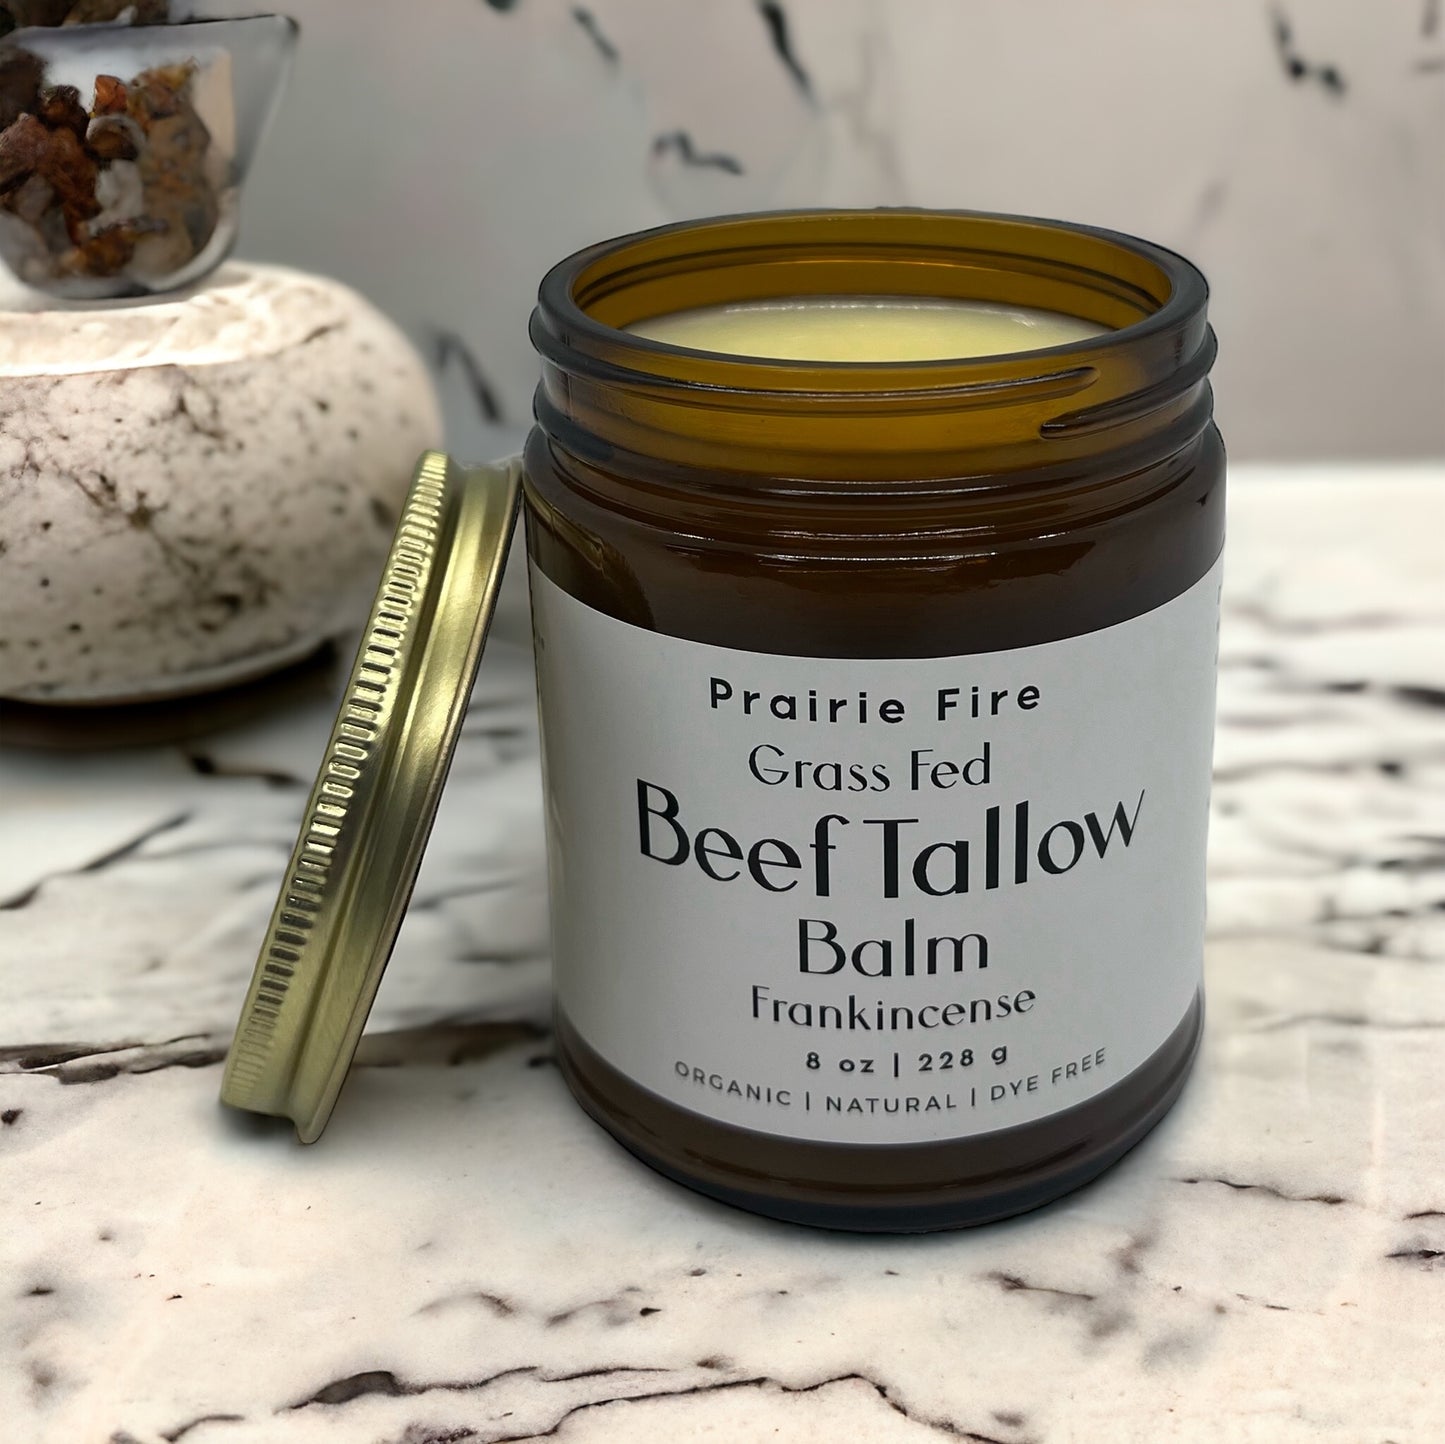 Beef Tallow Balm - 8 oz - Organic Grass Fed - Moisturizing Skin Care